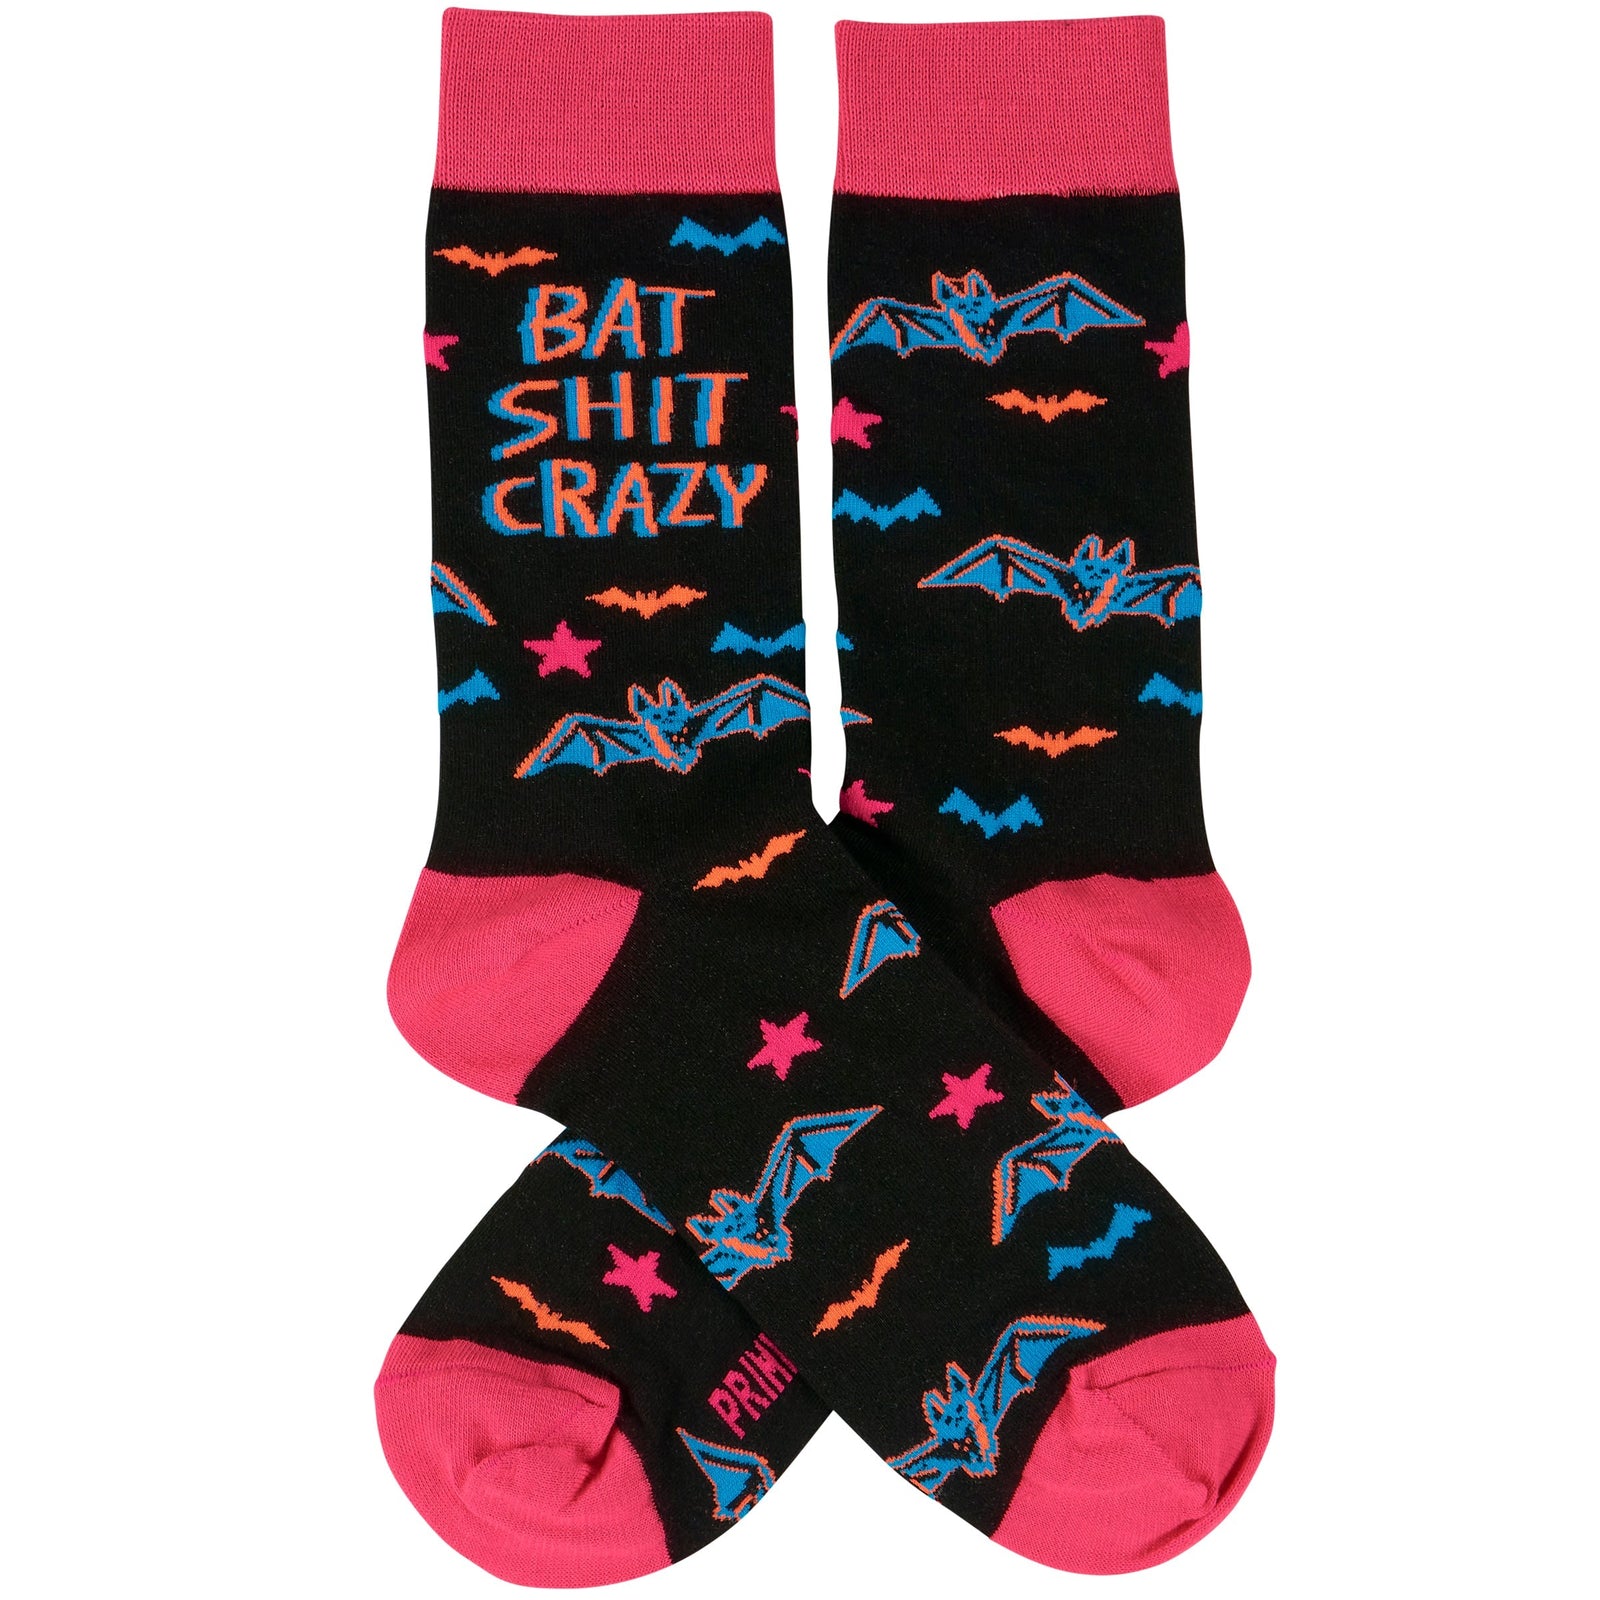 Bat Crazy Socks | Women's Colorful Halloween-Themed Self-Expression Socks